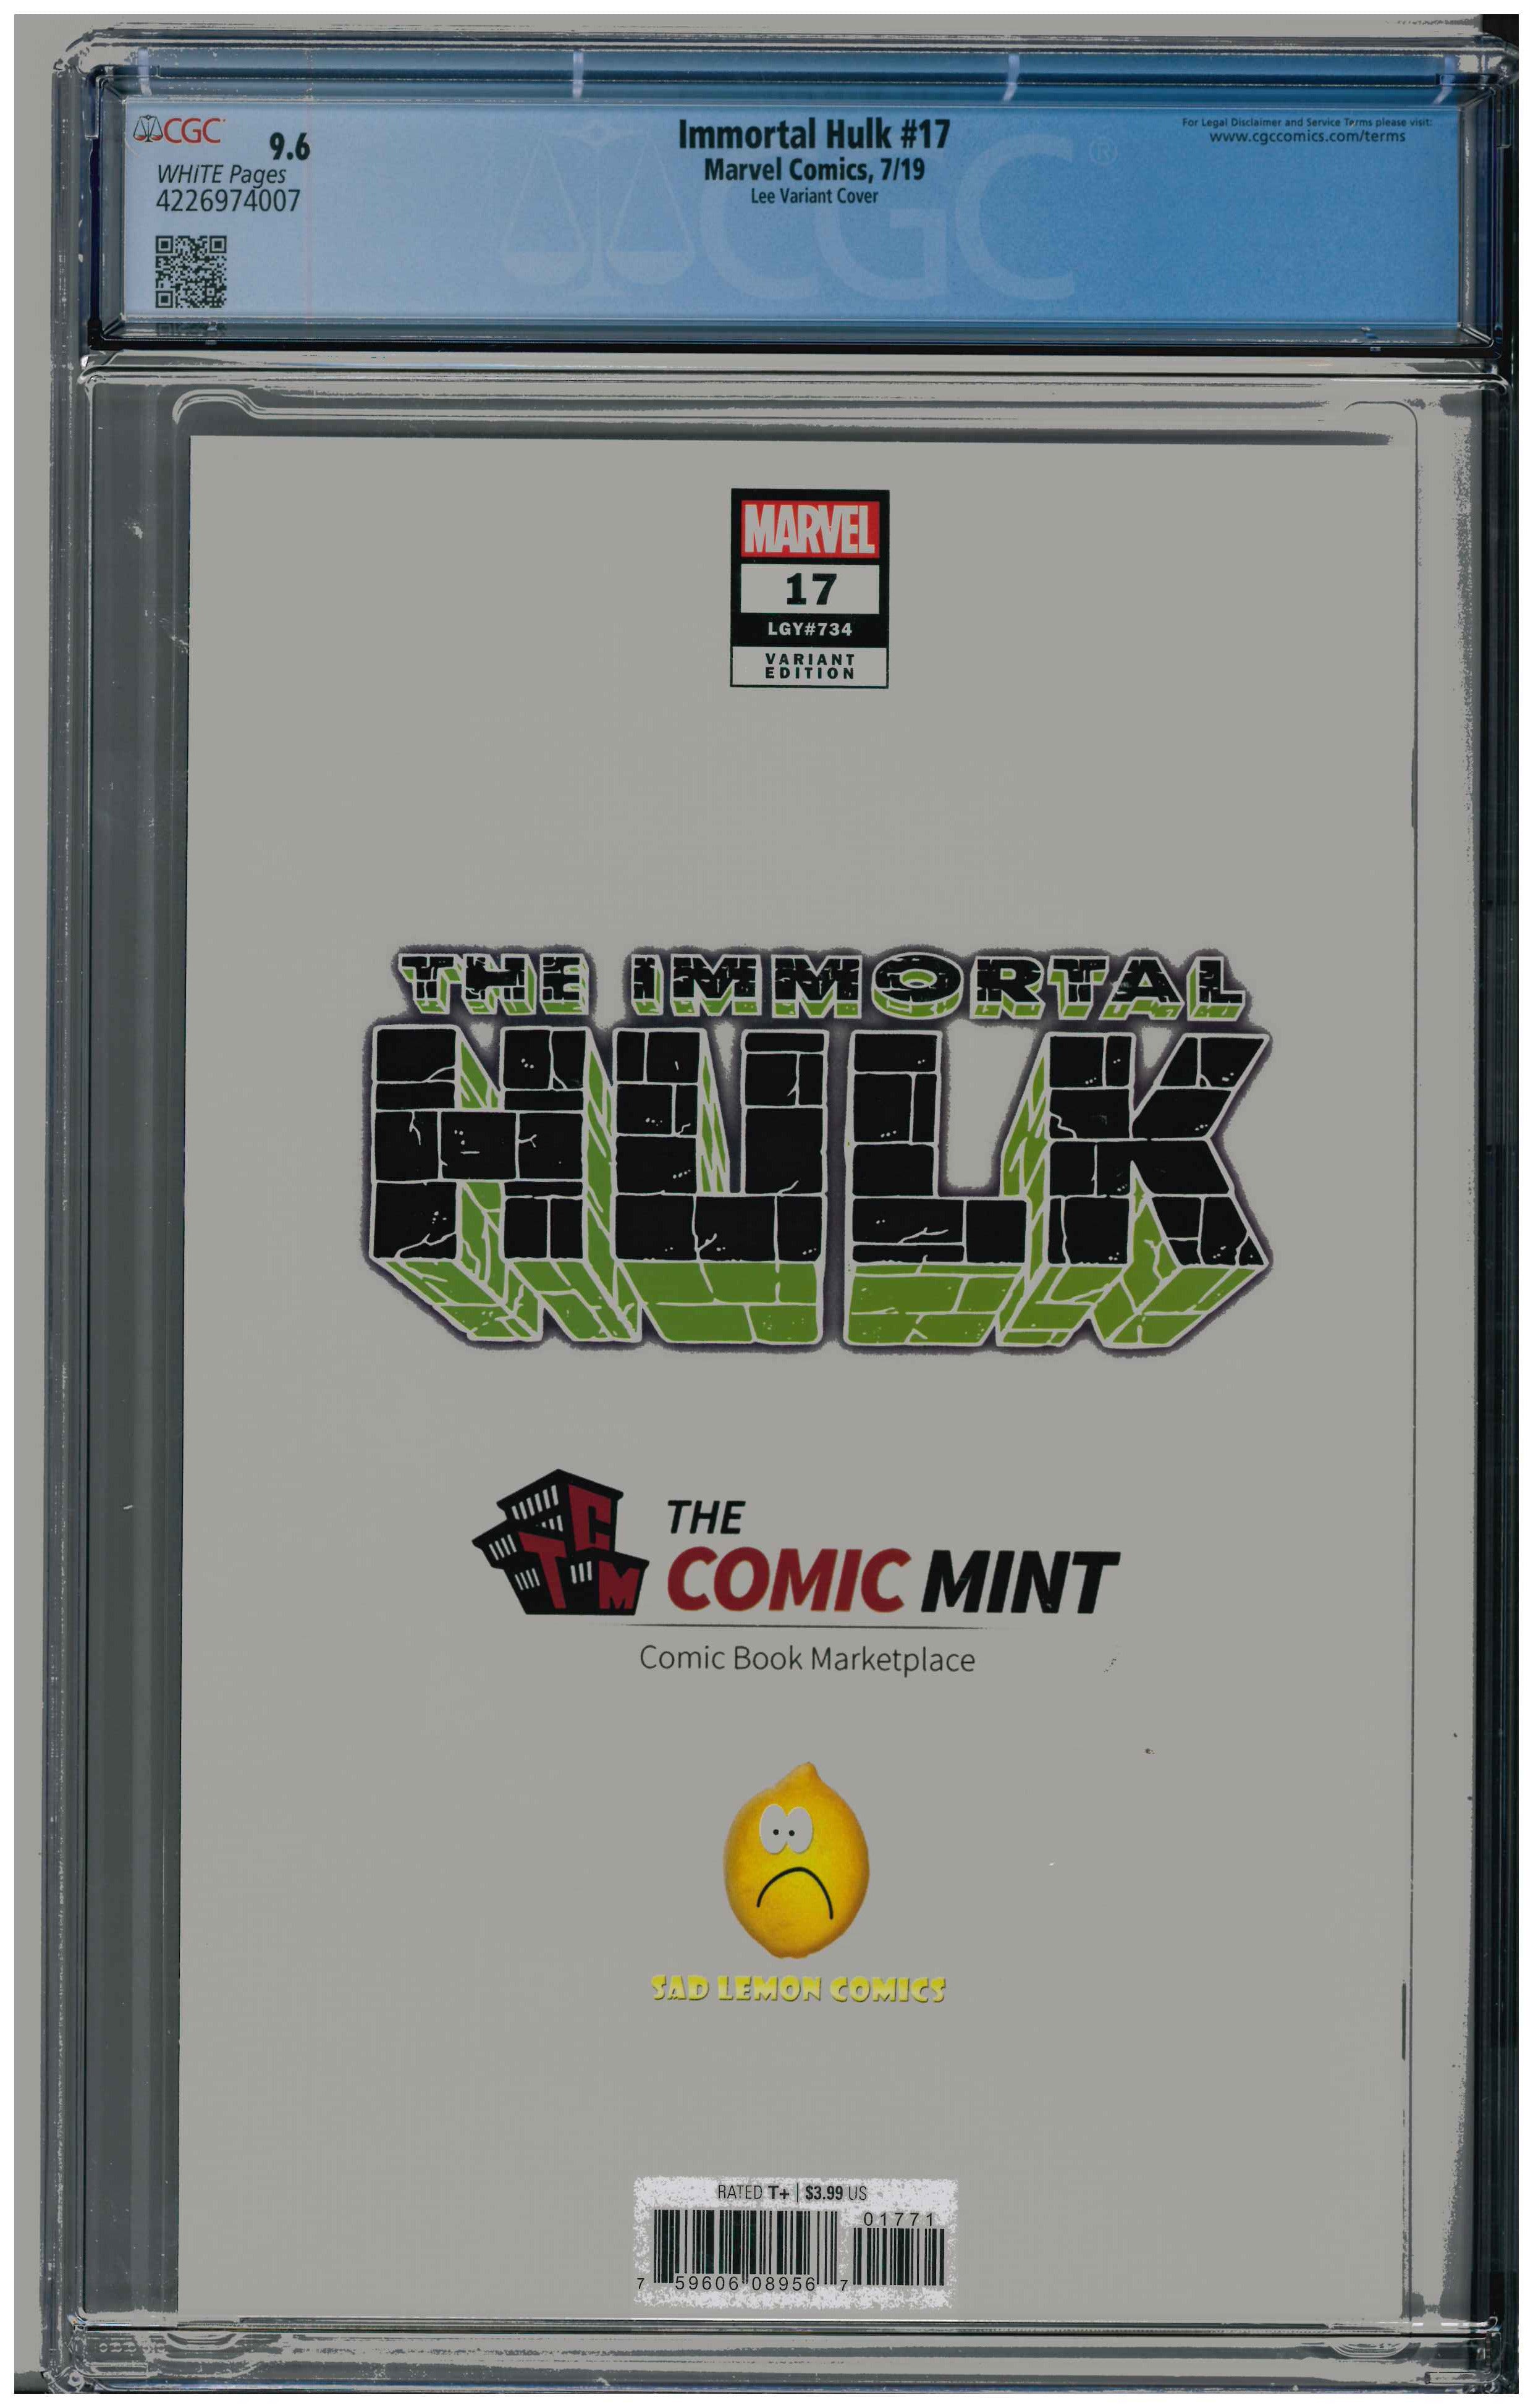 Immortal Hulk #17 backside